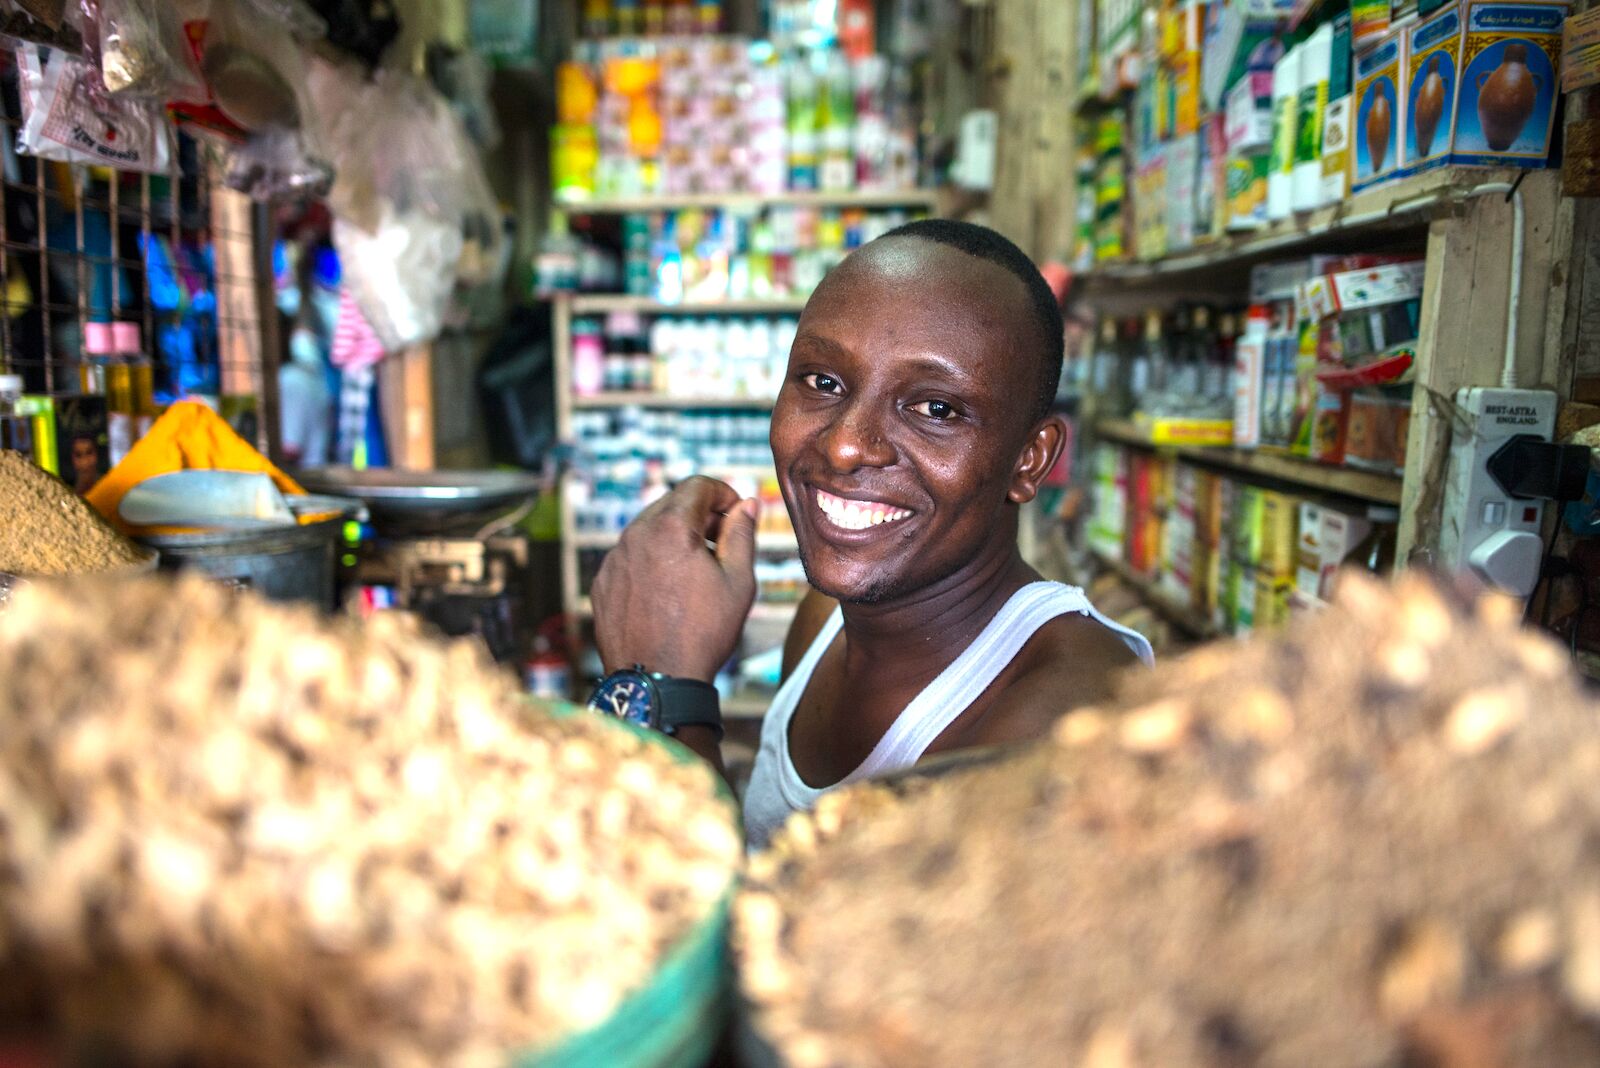 Shopkeeper in Kenya. In Kenya, people speak Swahili.